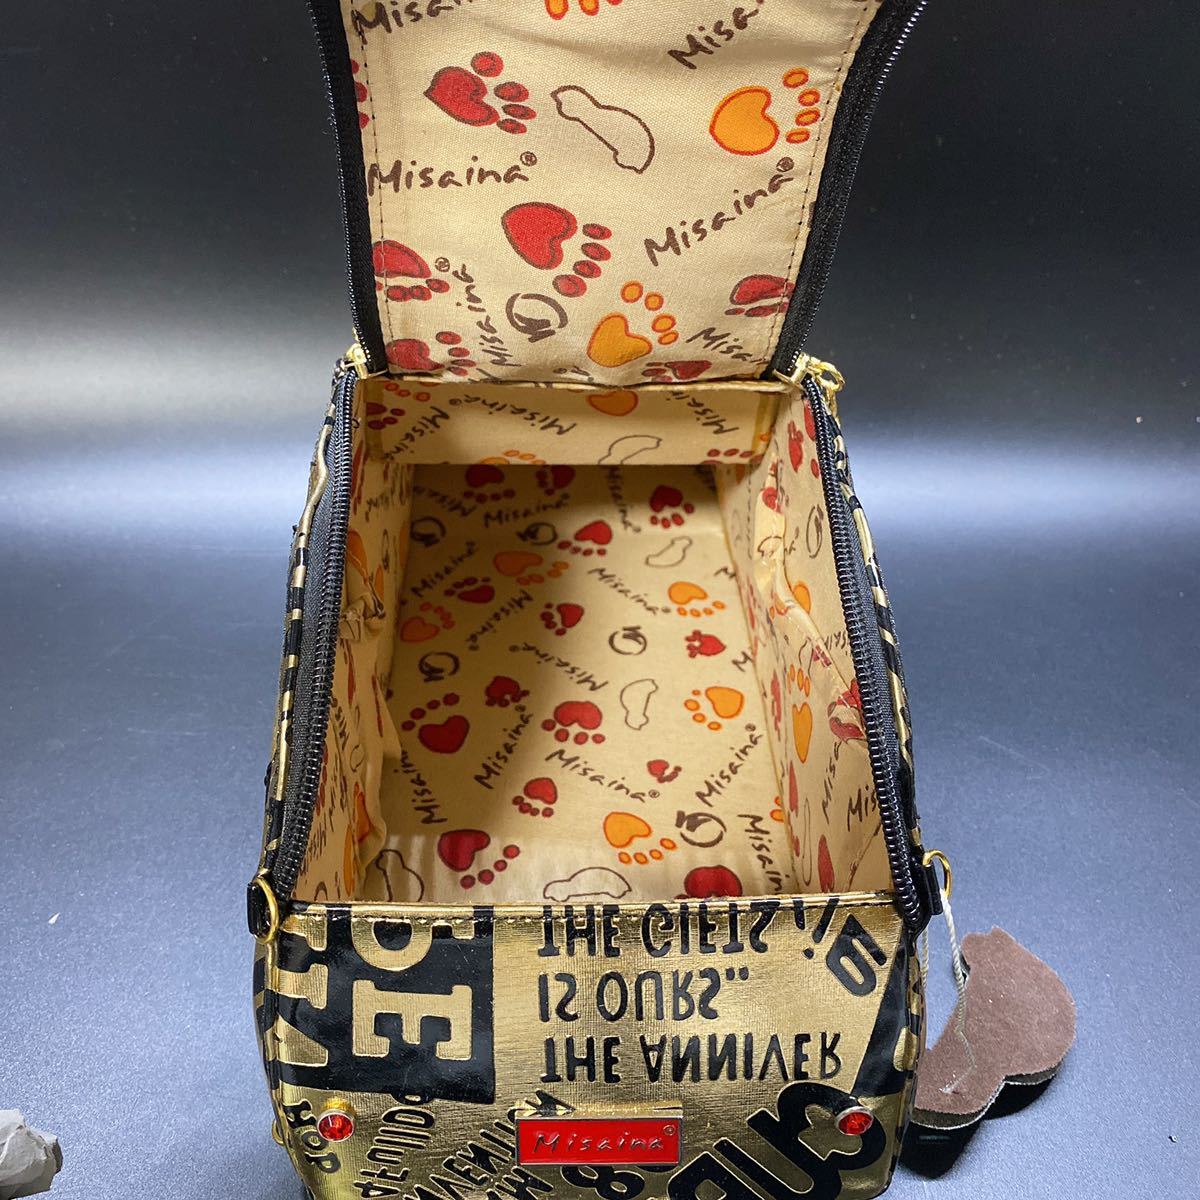 misaina Classic cab beaker handbag car type Gold zipper shoulder bag used unused 